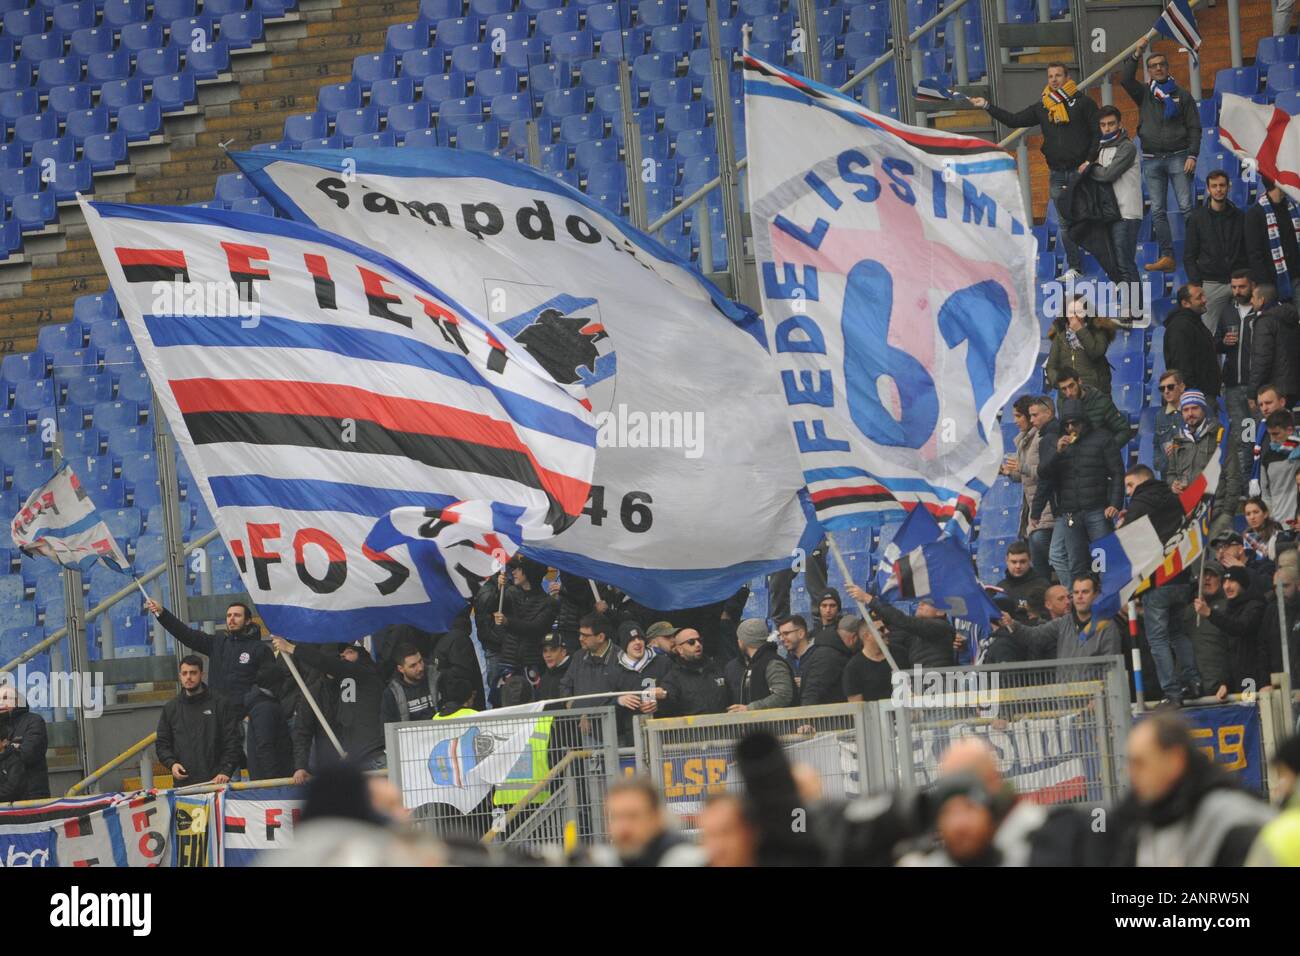 fans sampdoria during Lazio vs Sampdoria , Roma, Italy, 18 Jan 2020, Soccer Italian Soccer Serie A Men Championship Stock Photo